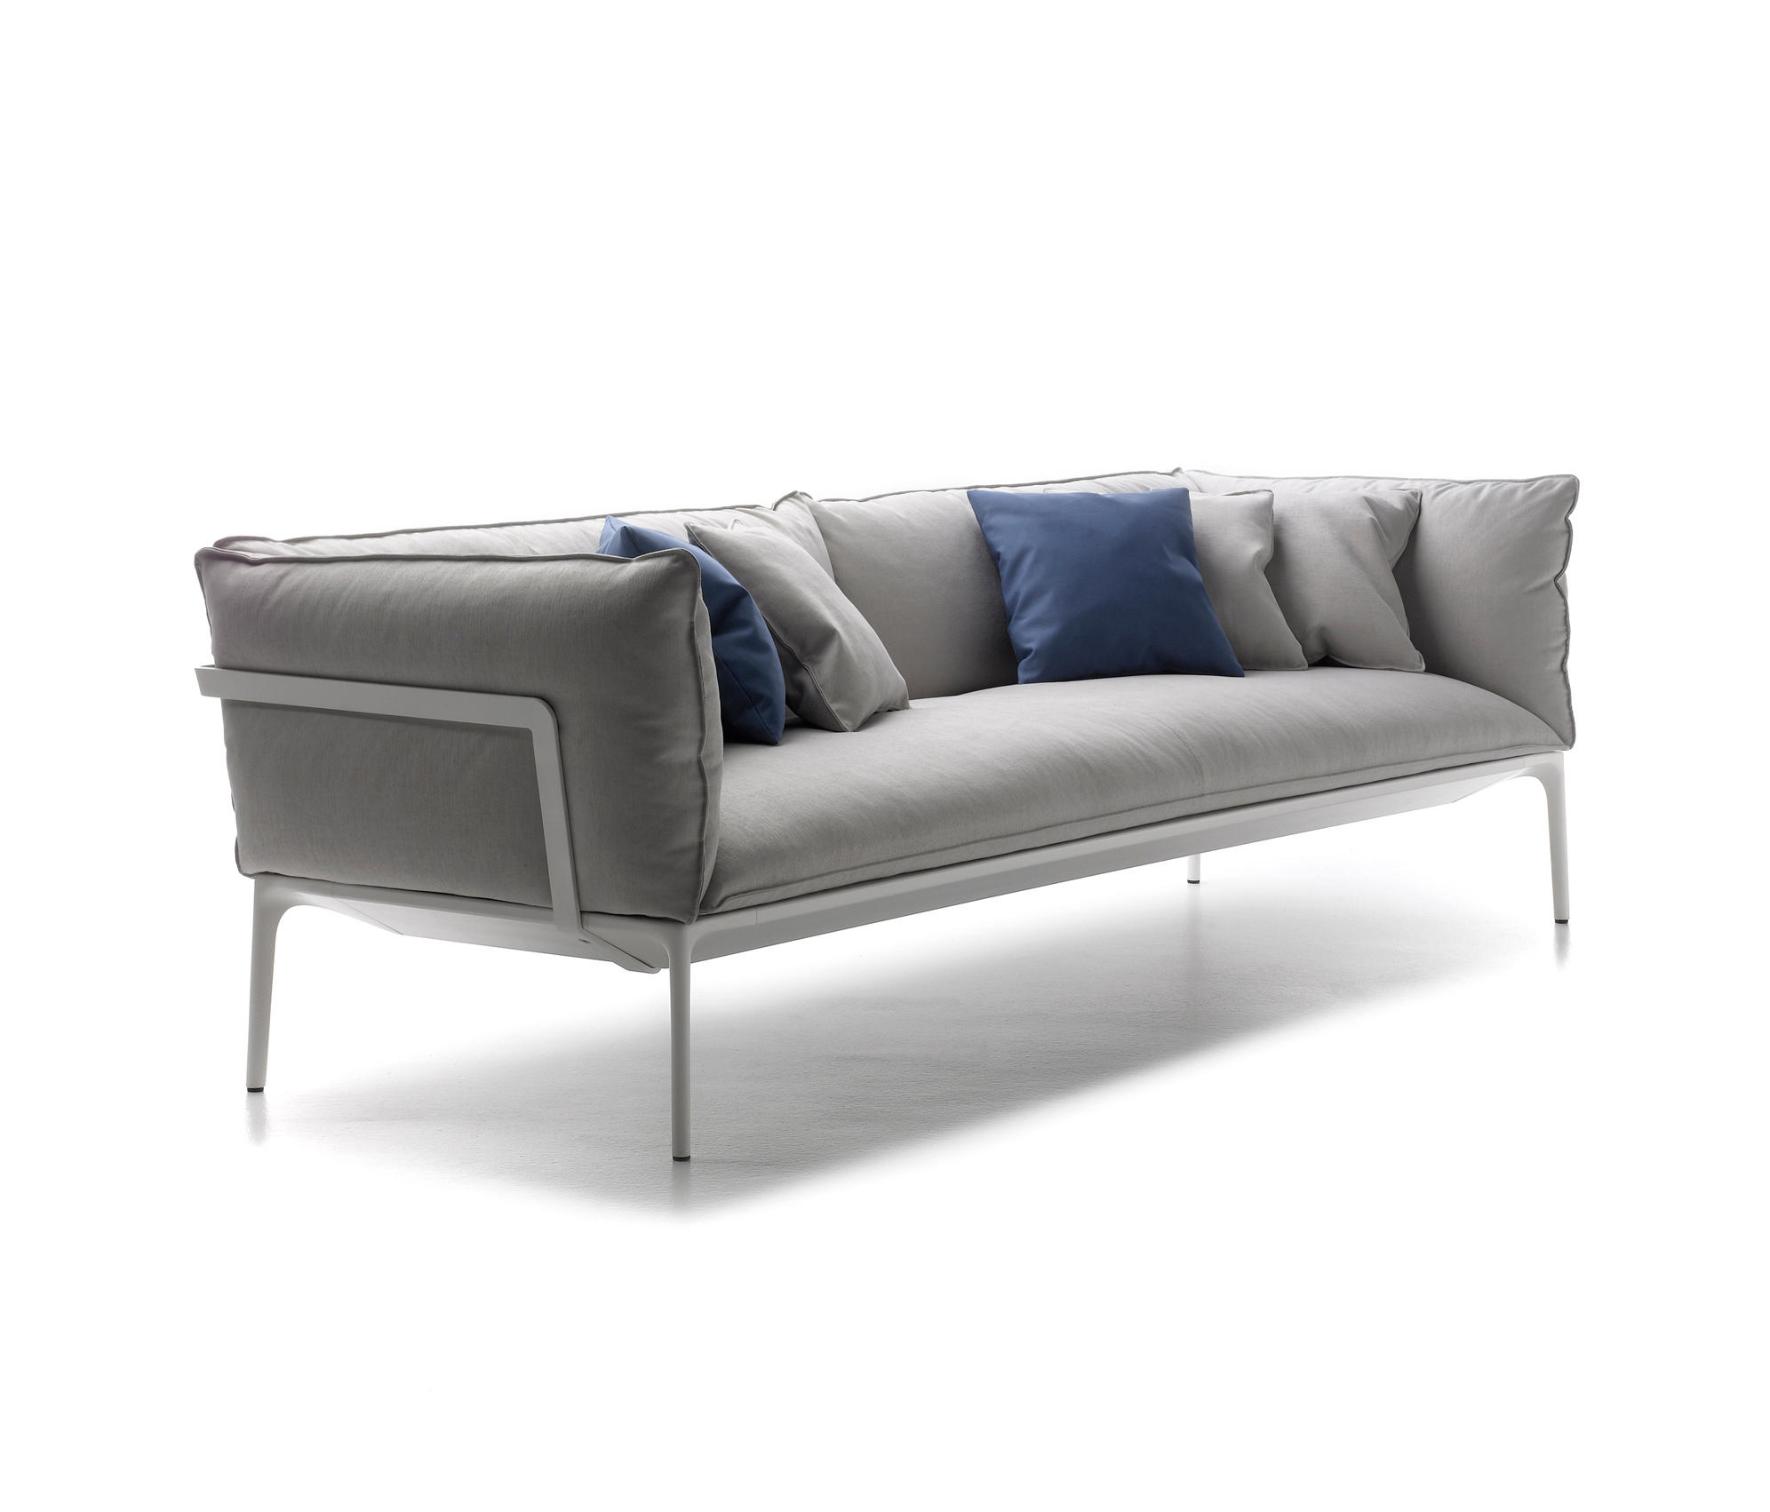 Yale Italian Sofa ☞ Dimensions: Length 260 cm